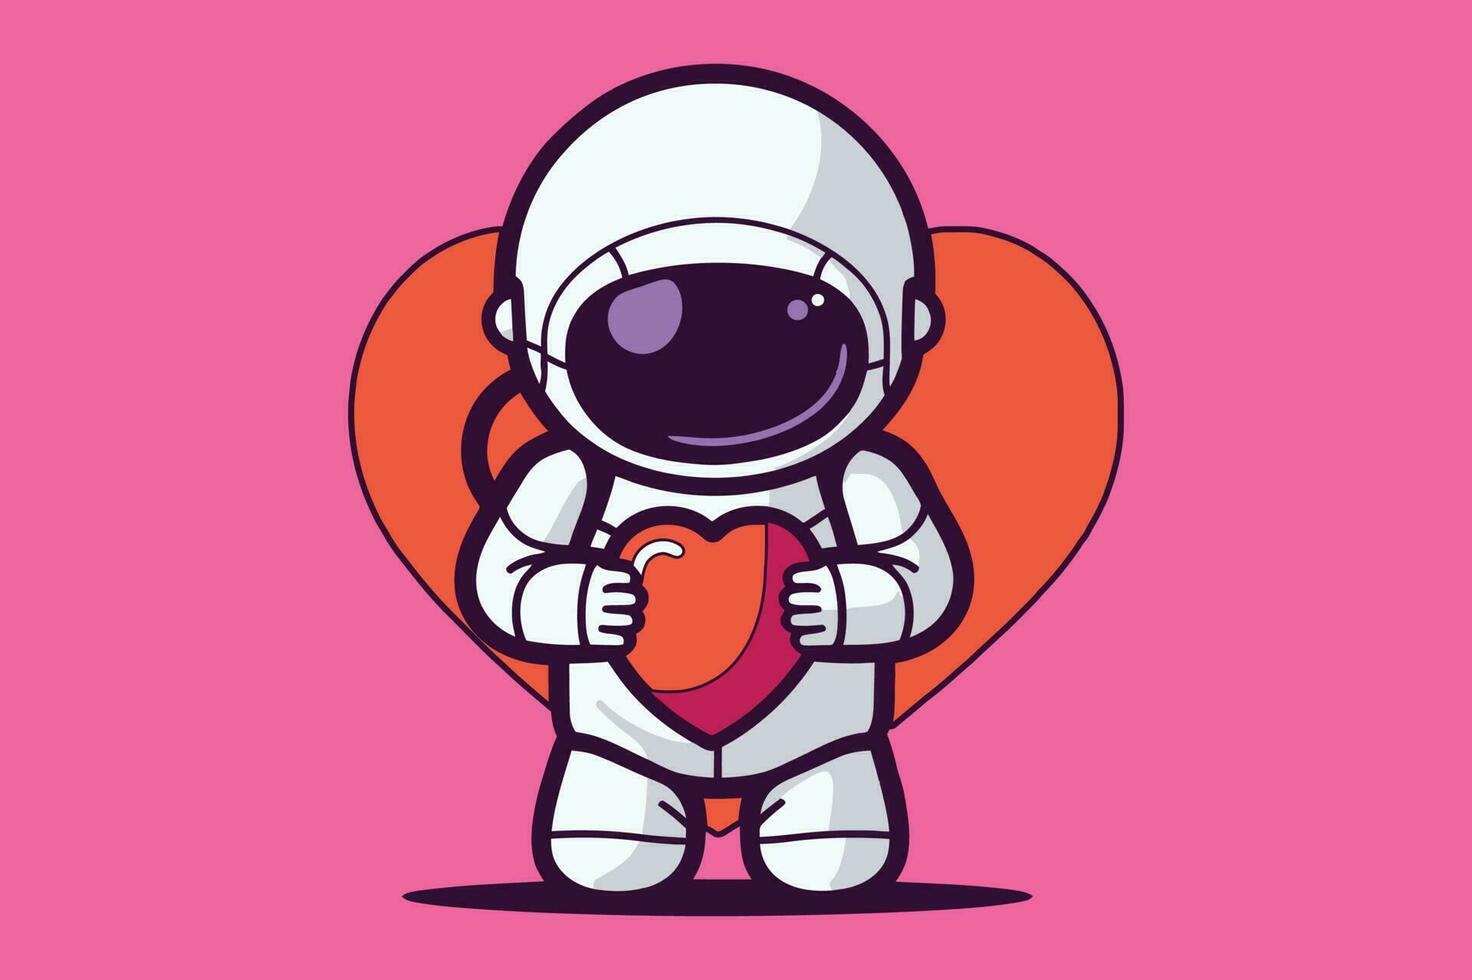 espacio astronauta dibujos animados extraterrestre con un corazón globo mascota logo vector sublimación diseño